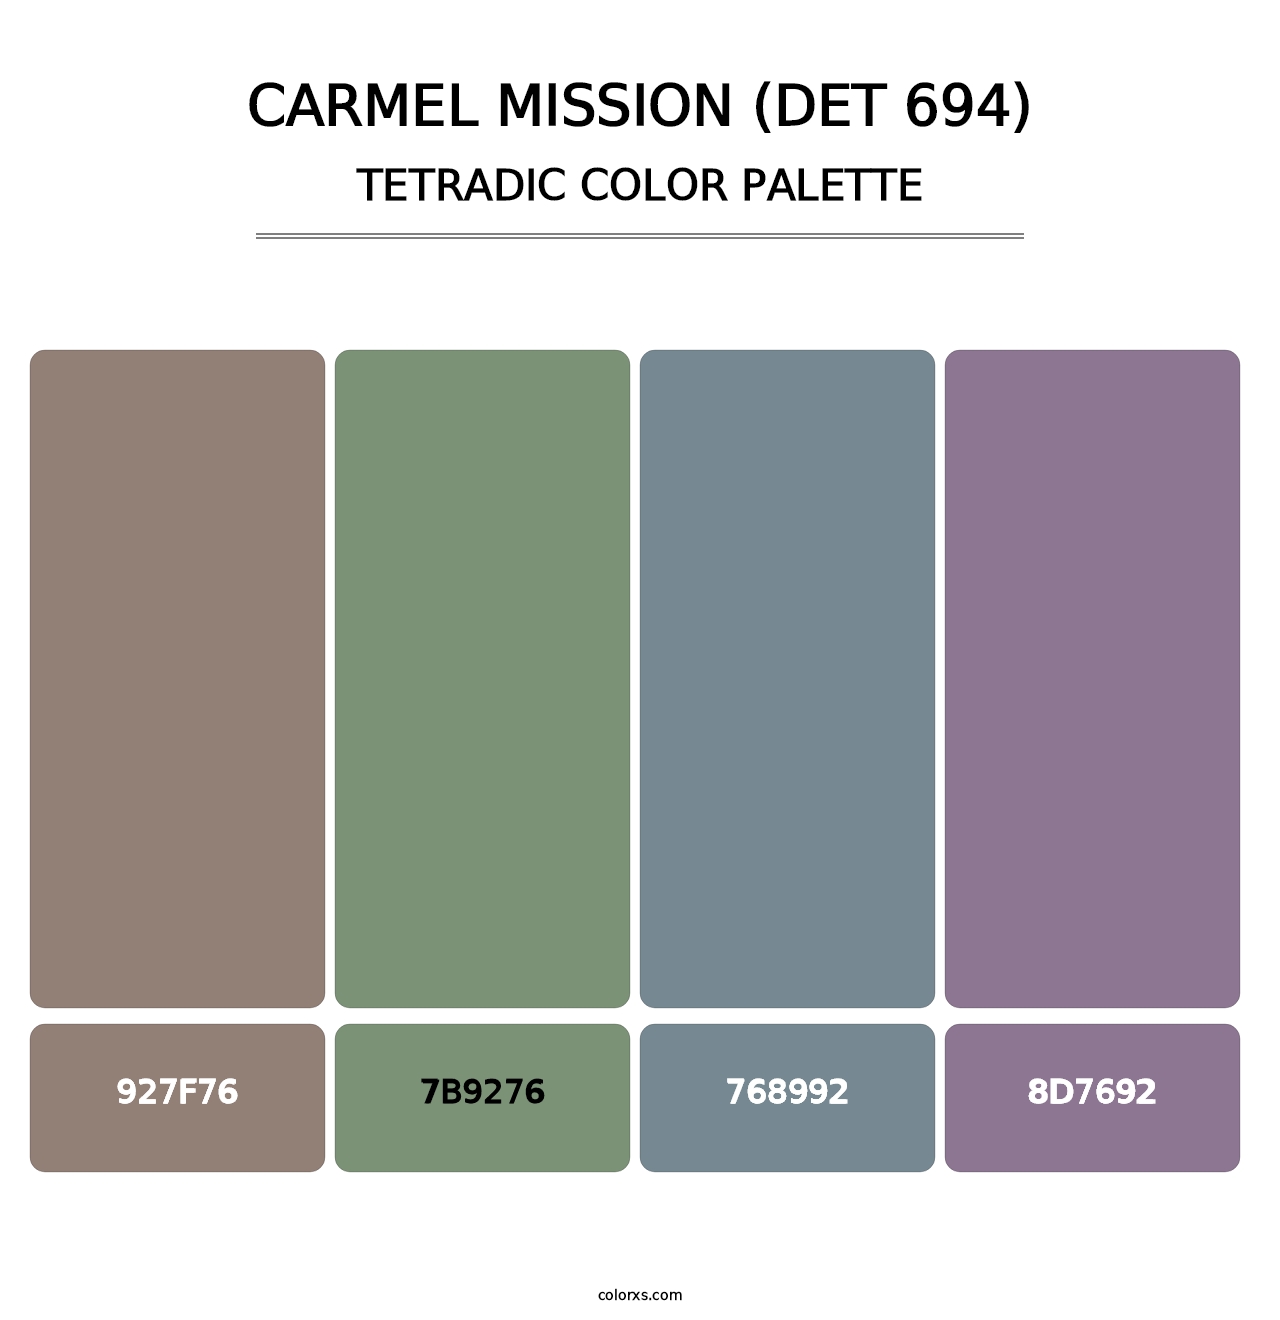 Carmel Mission (DET 694) - Tetradic Color Palette